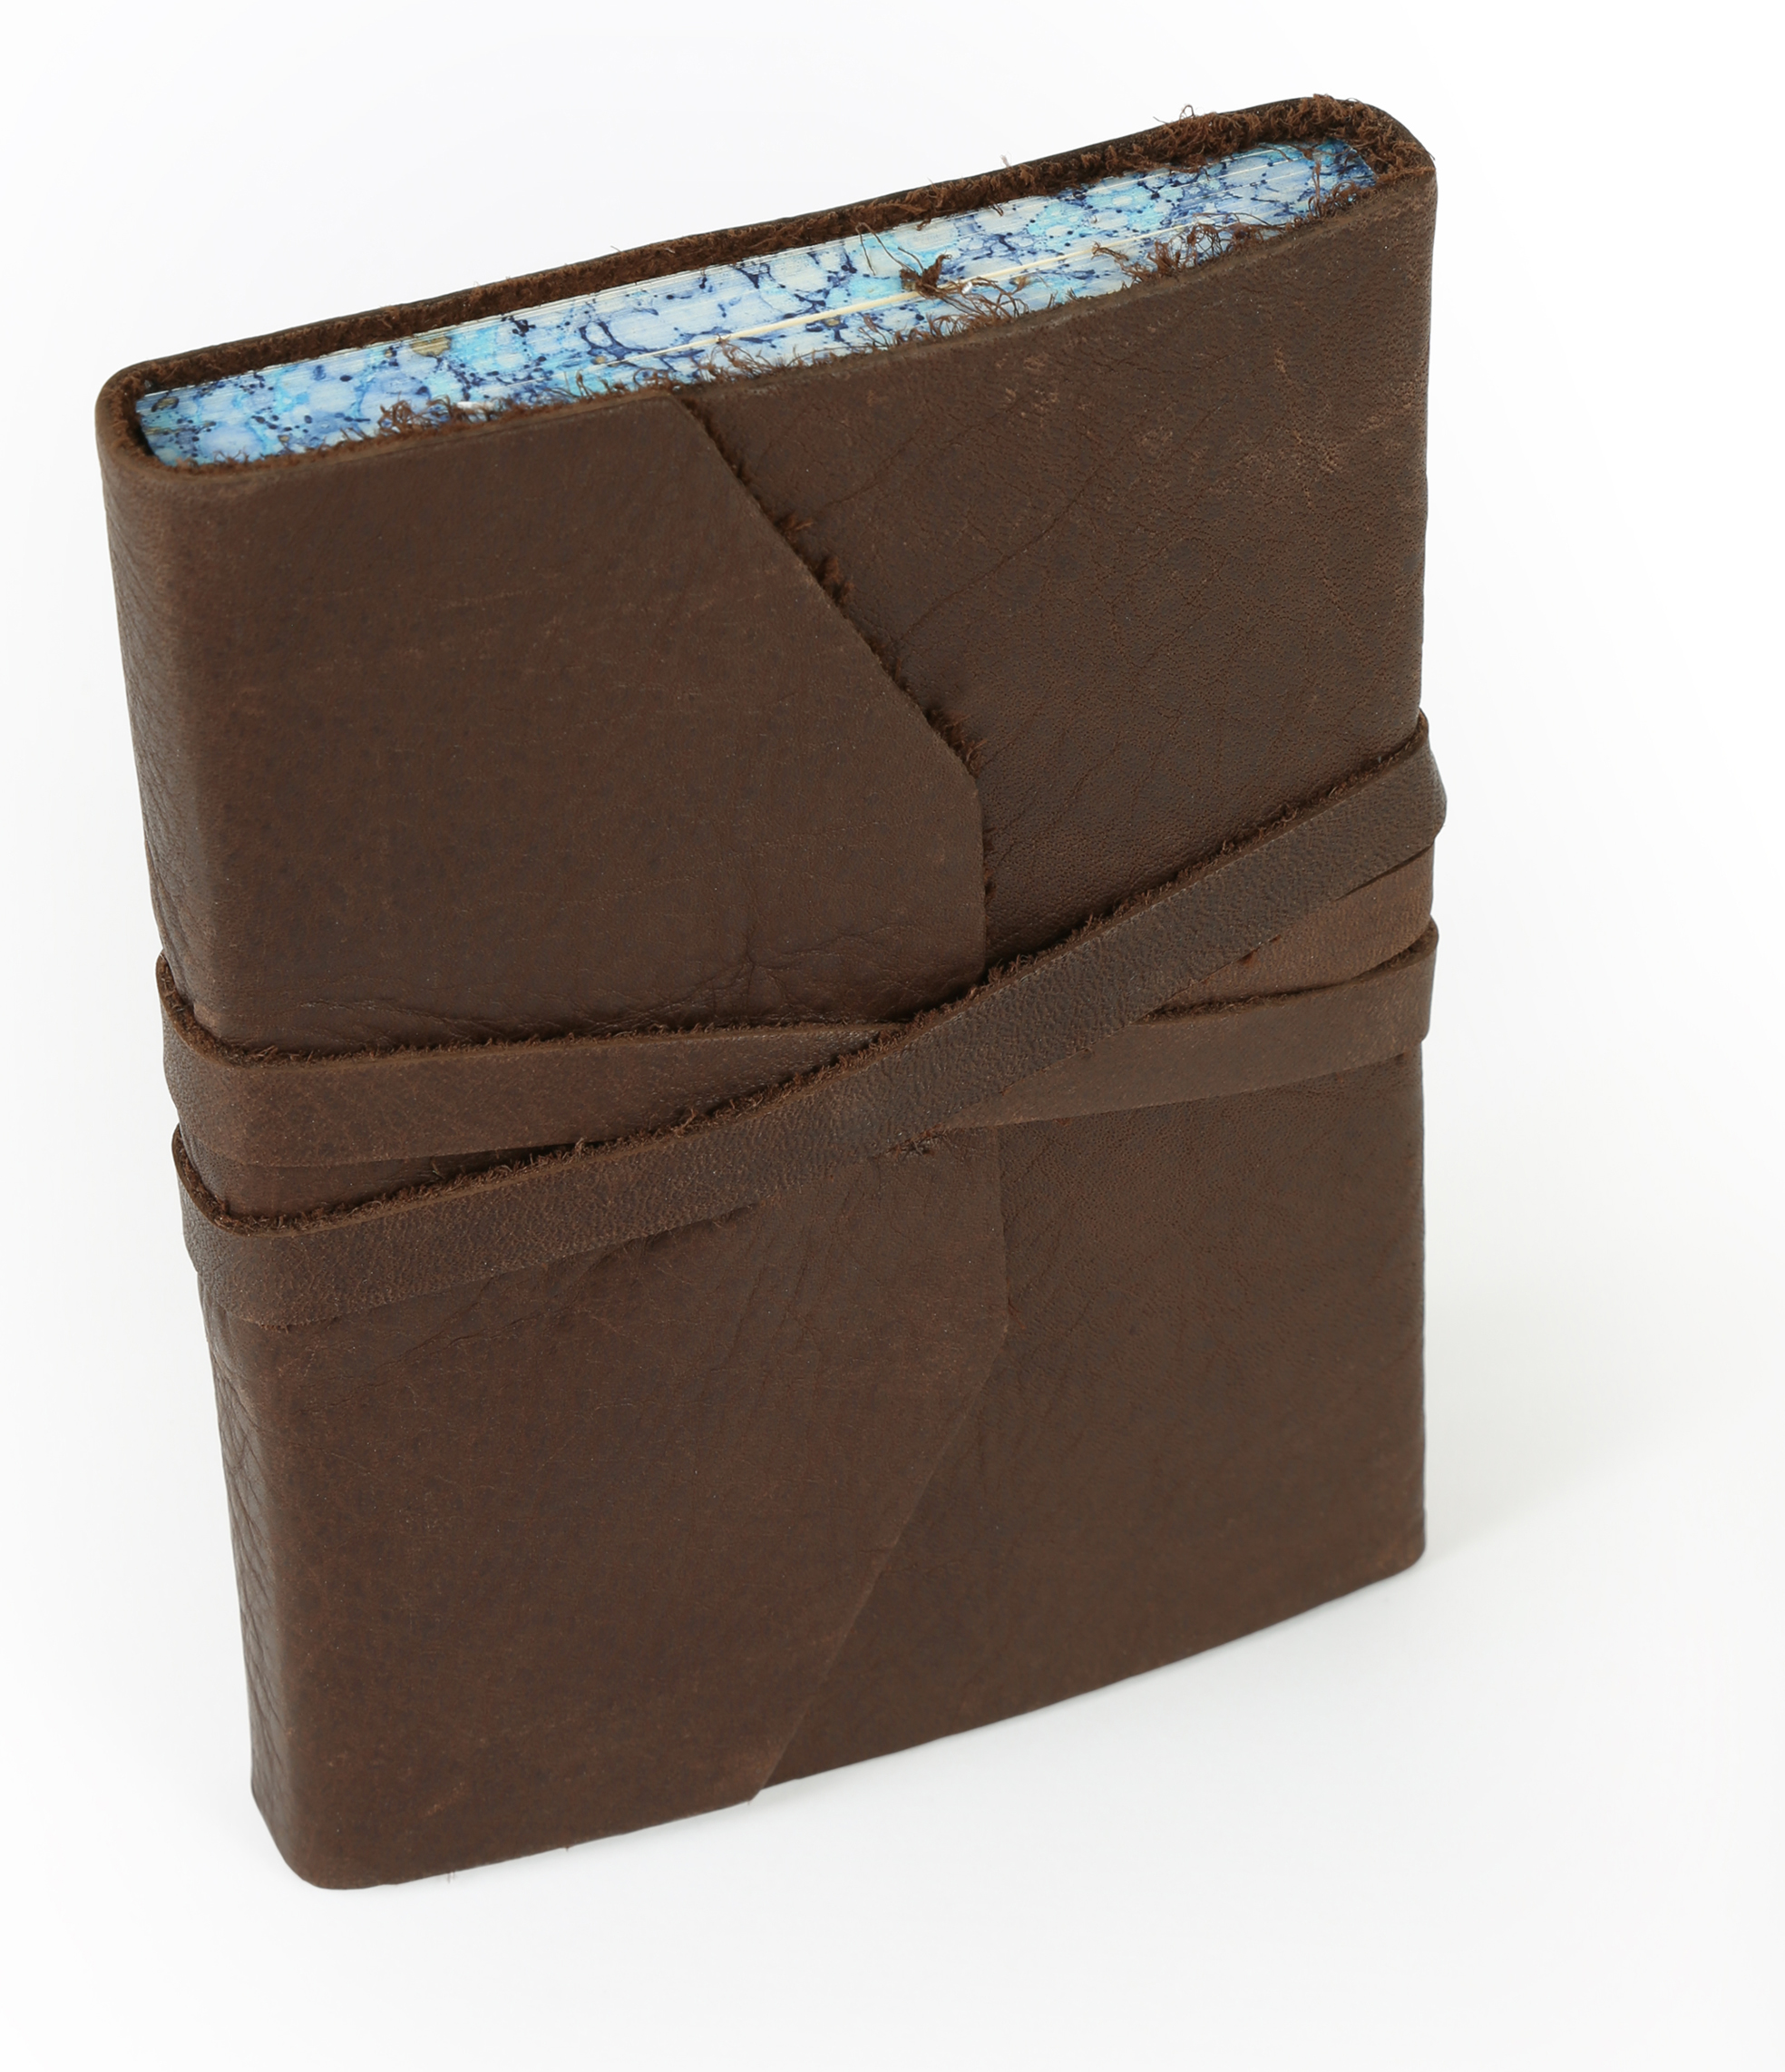 N462/M BRWN/Blu - Genuine Leather Journal with Tie